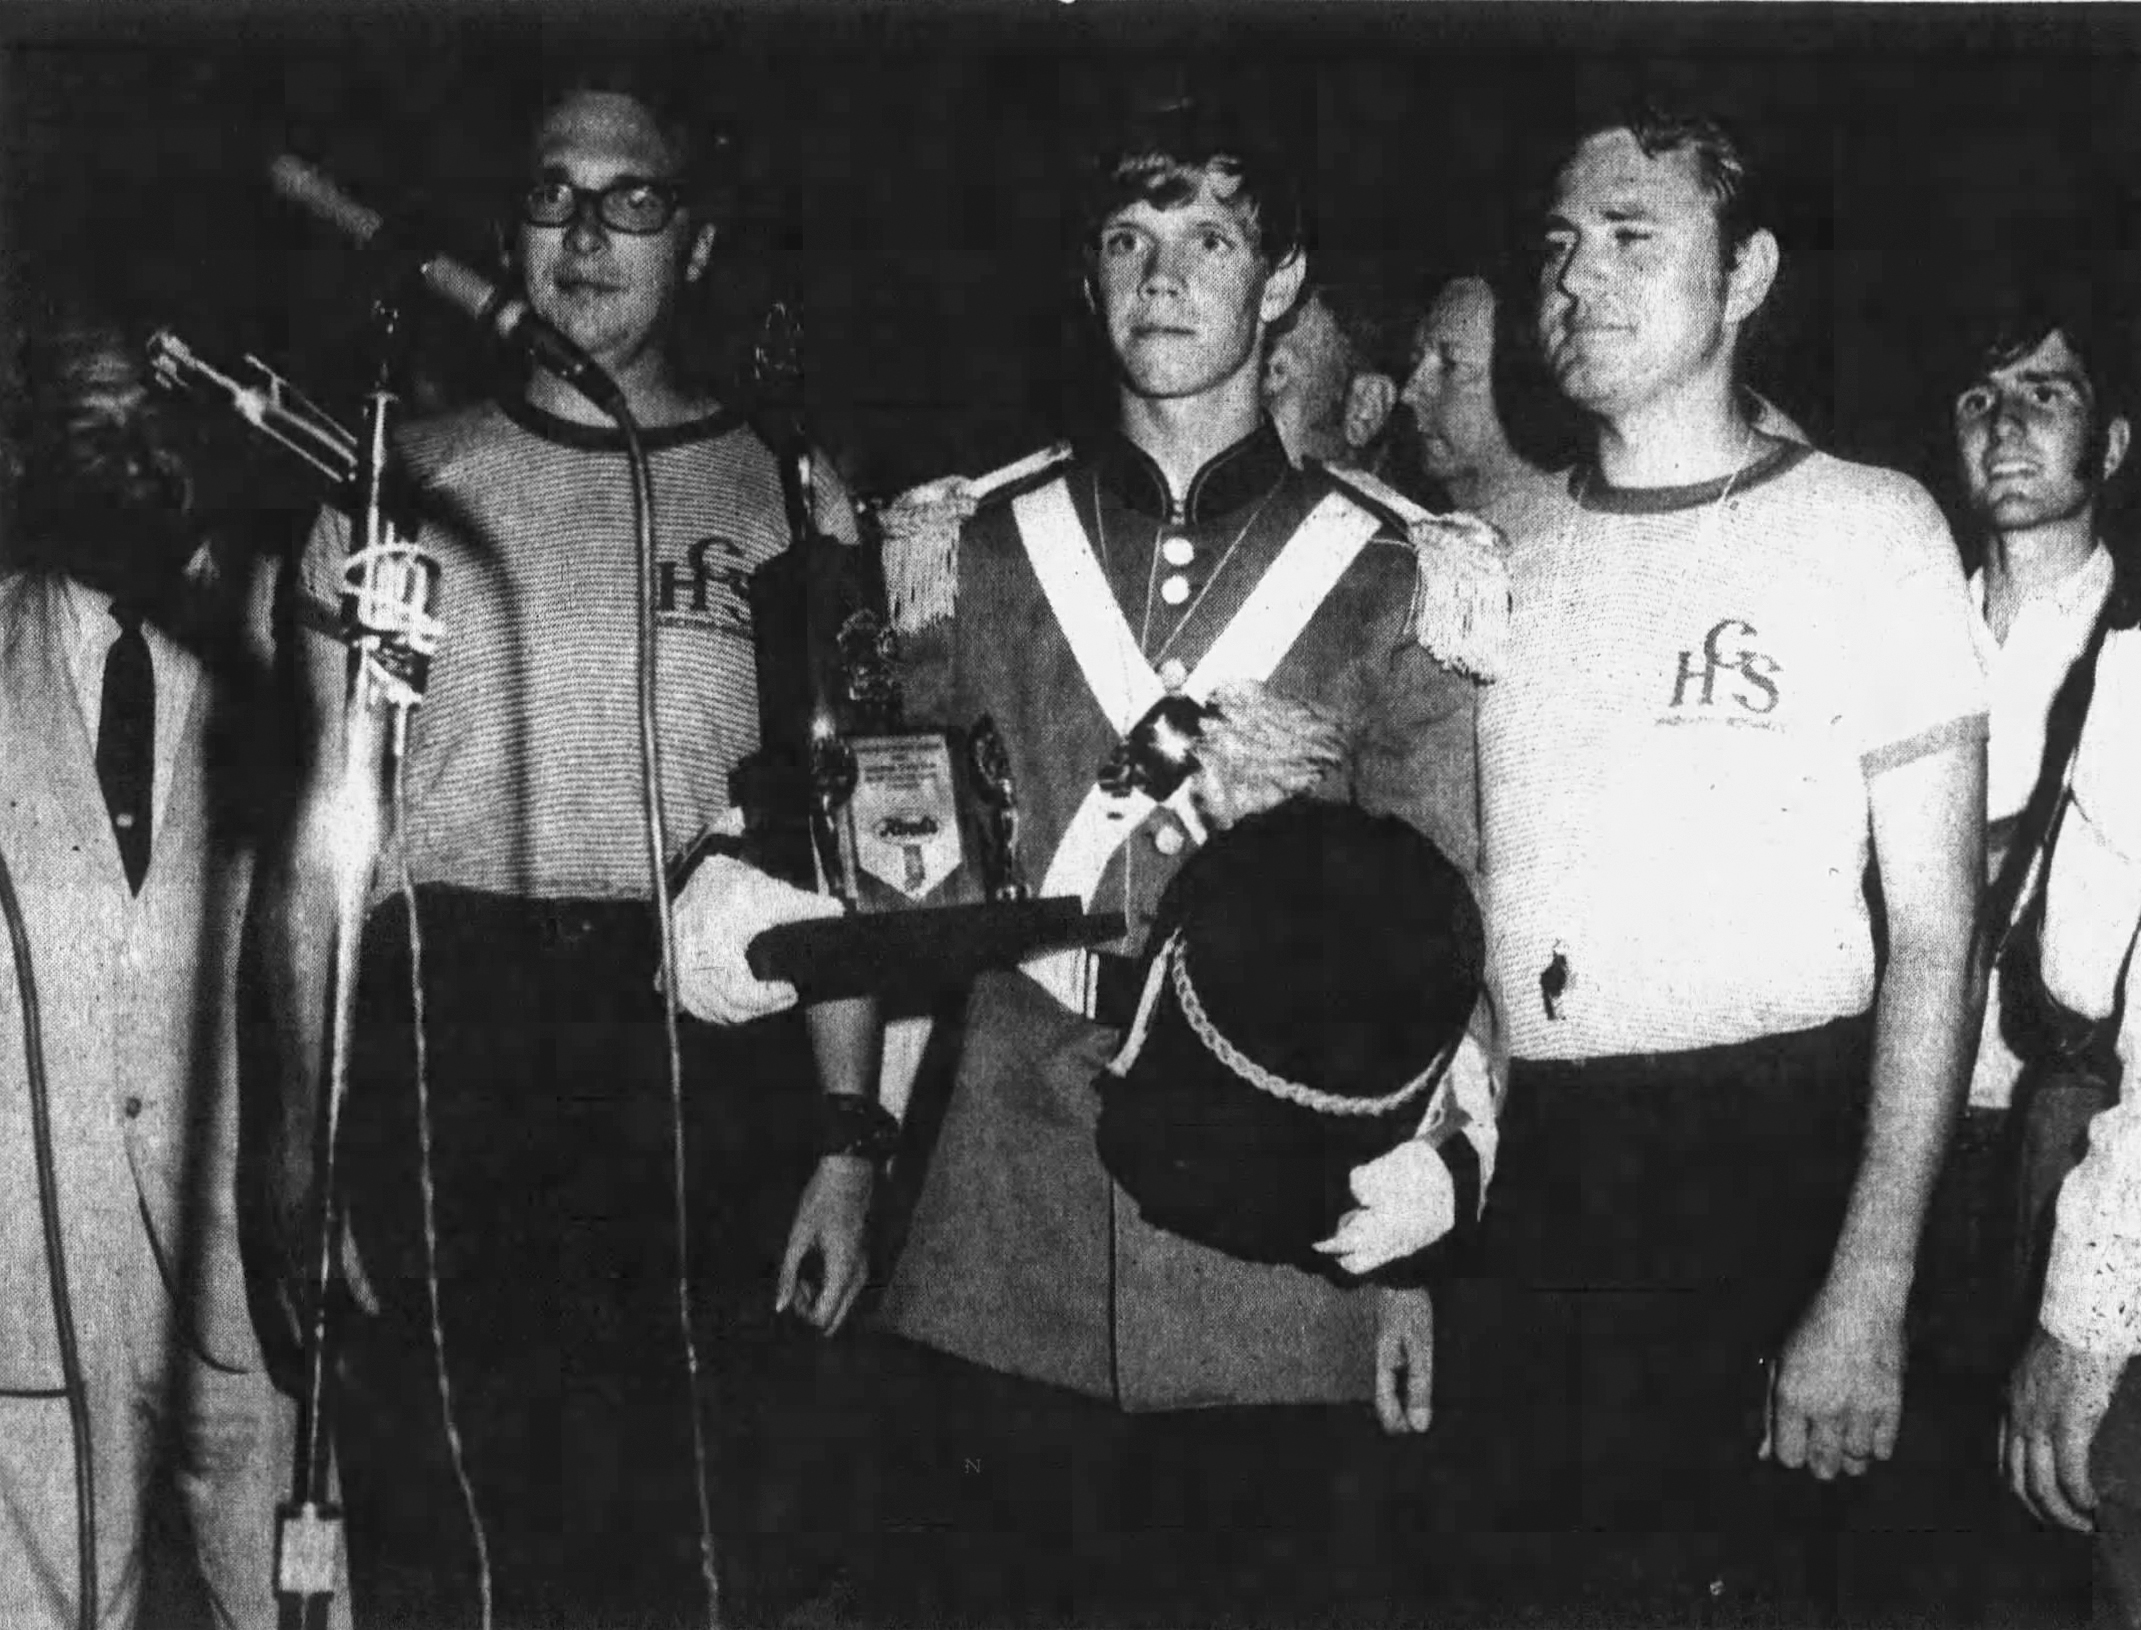 1971 State Fair Trophy - 16th Place - Middle School Director Dan Rice, Drum Major Gordon Miller and Director David Van Veld. 